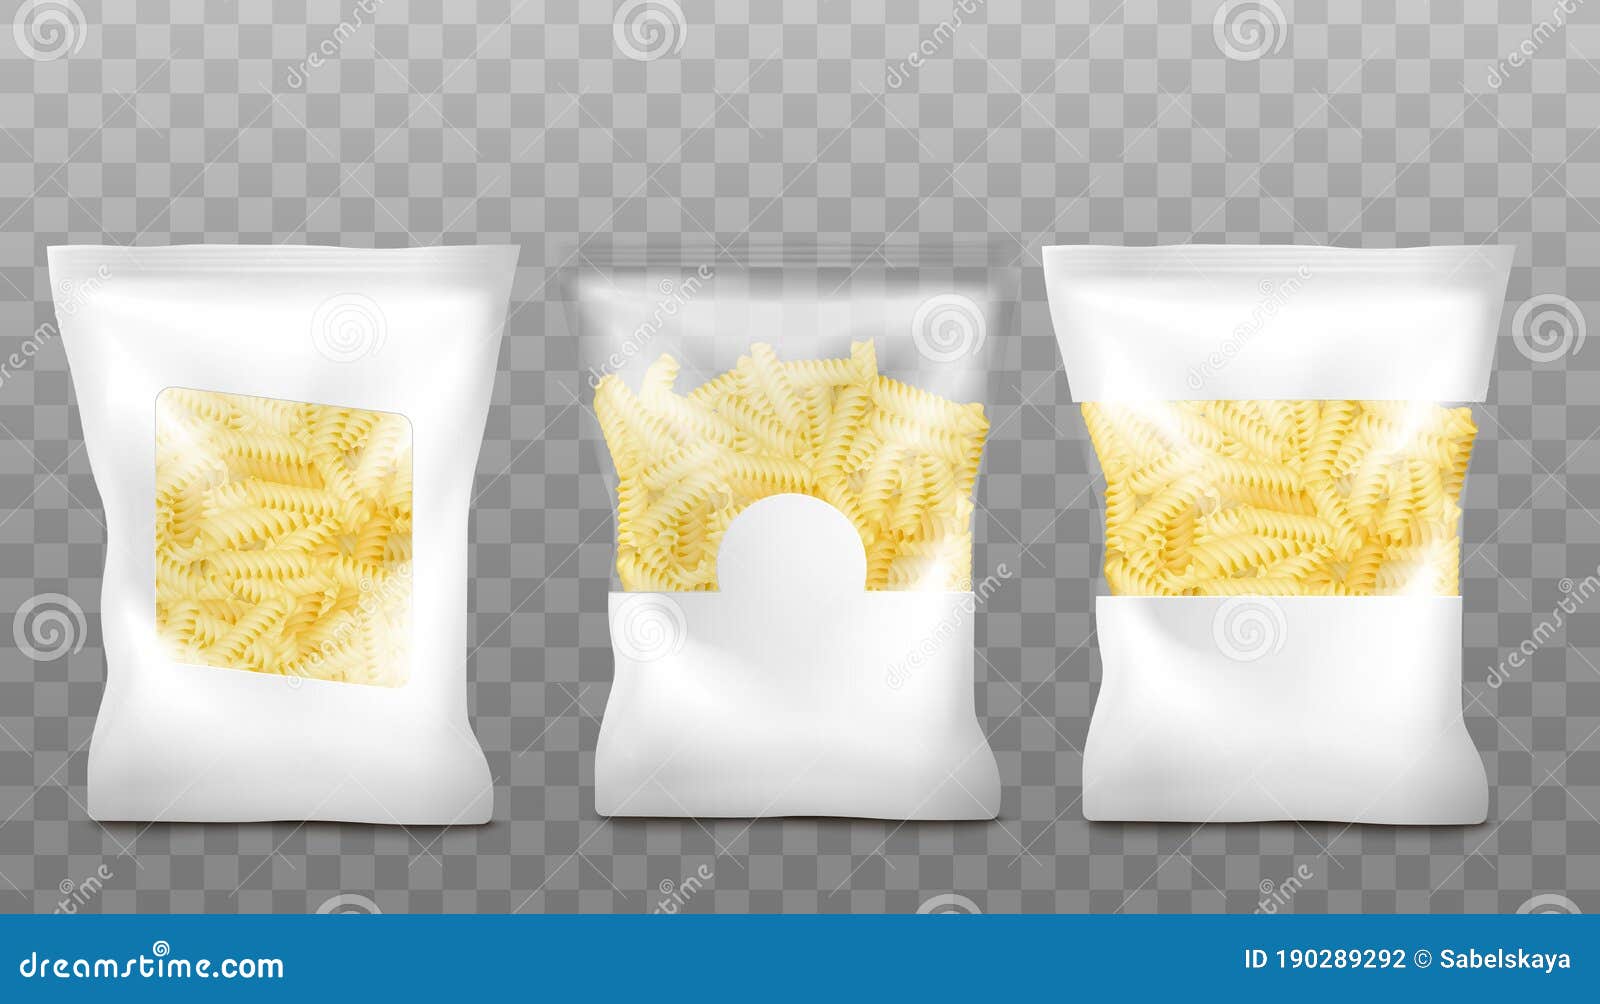 Download Realistic Pasta Package Mockup Set - White Plastic Bag ...